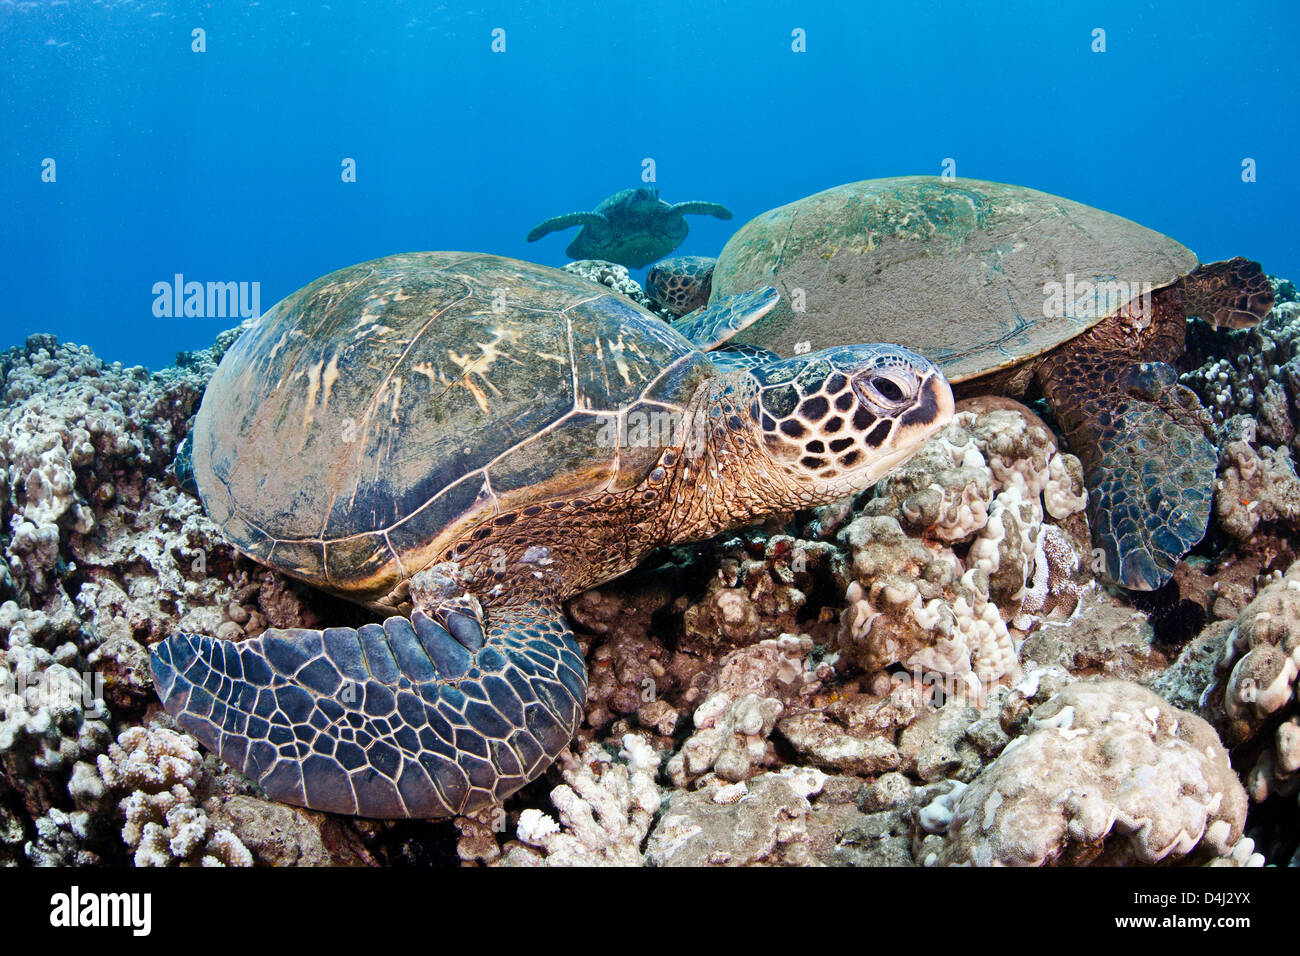 Green sea turtles, Chelonia mydas, an endangered species. Hawaii. Stock Photo